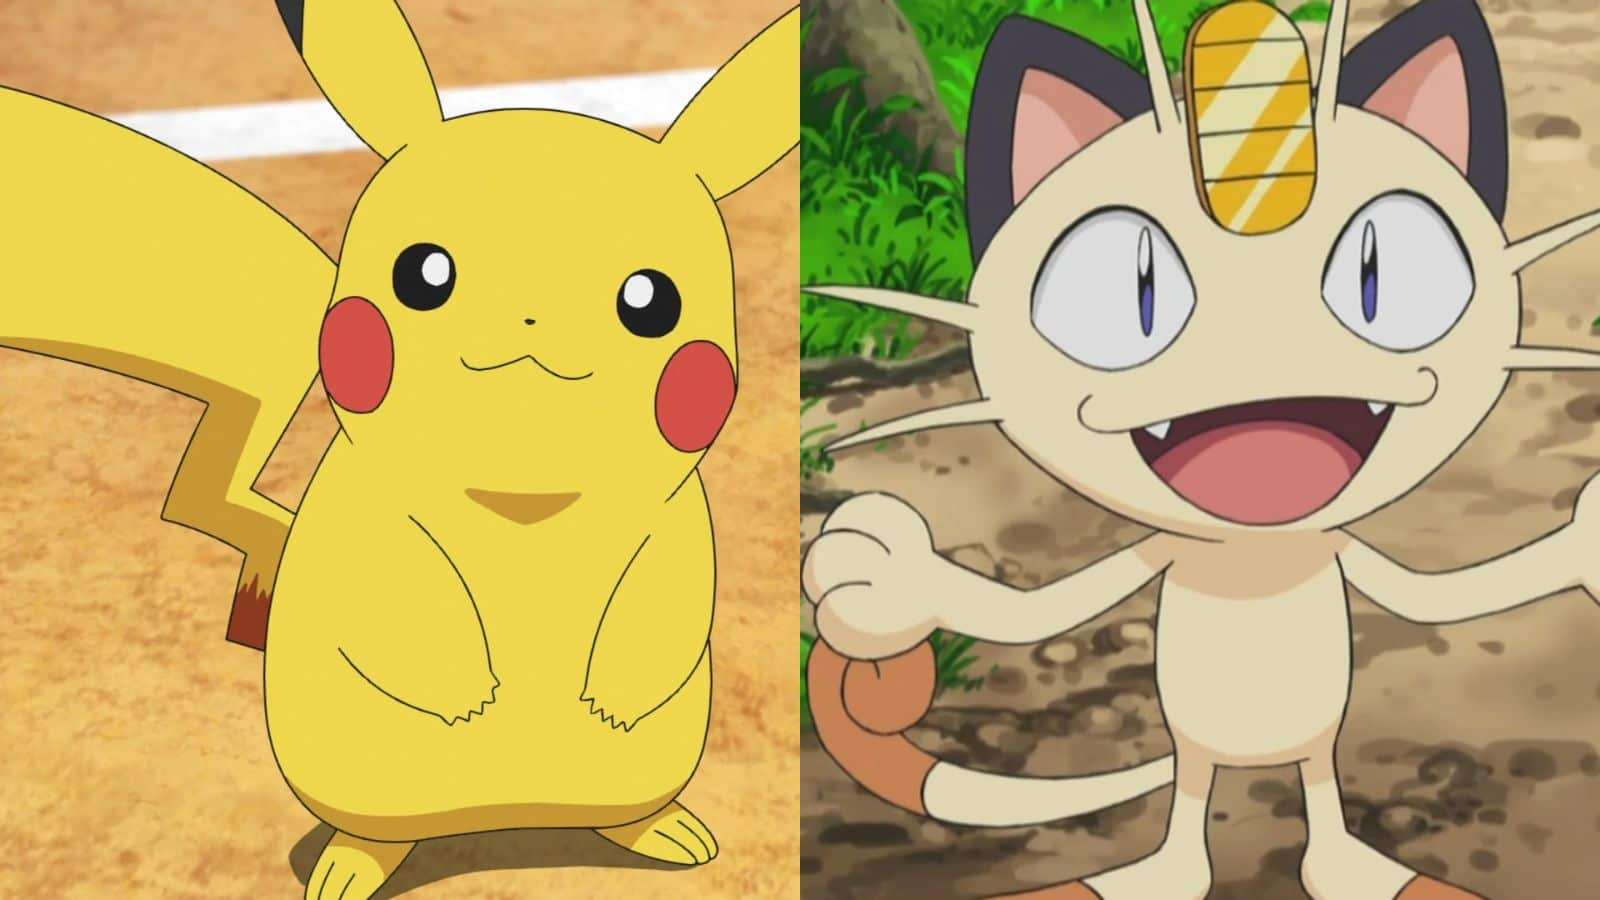 Pikachu and Meowth